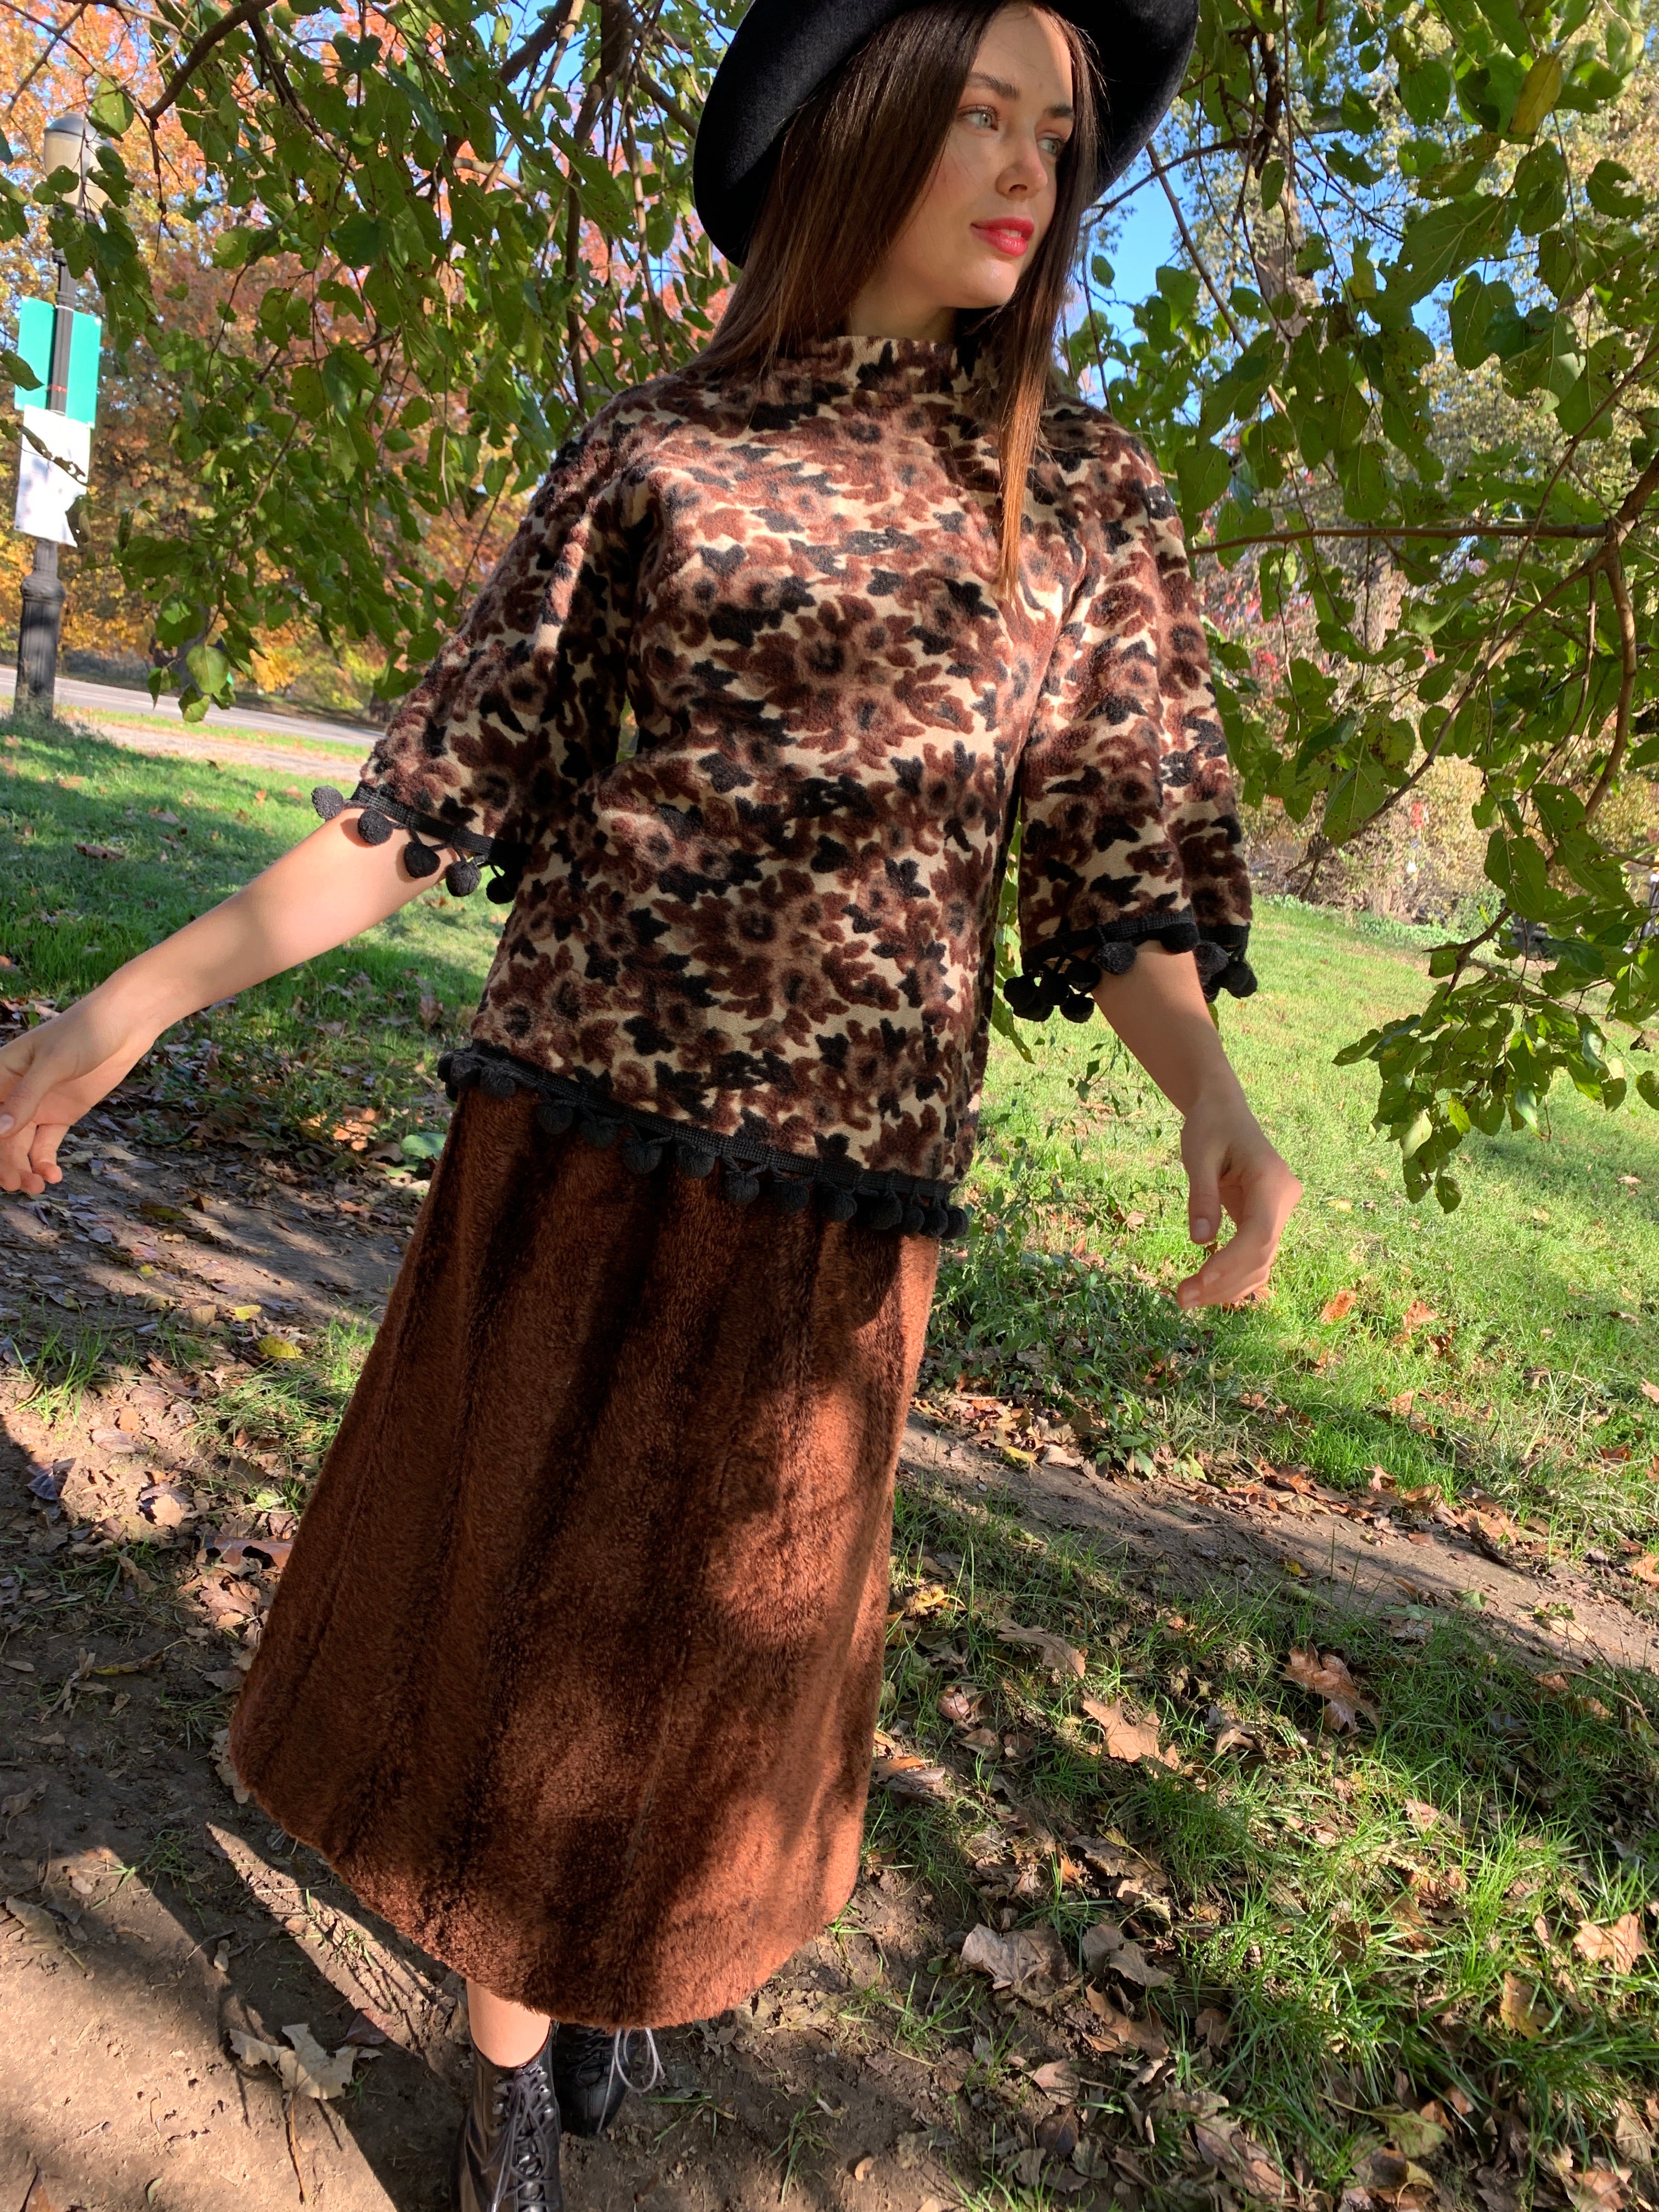 Brown faux fur skirt